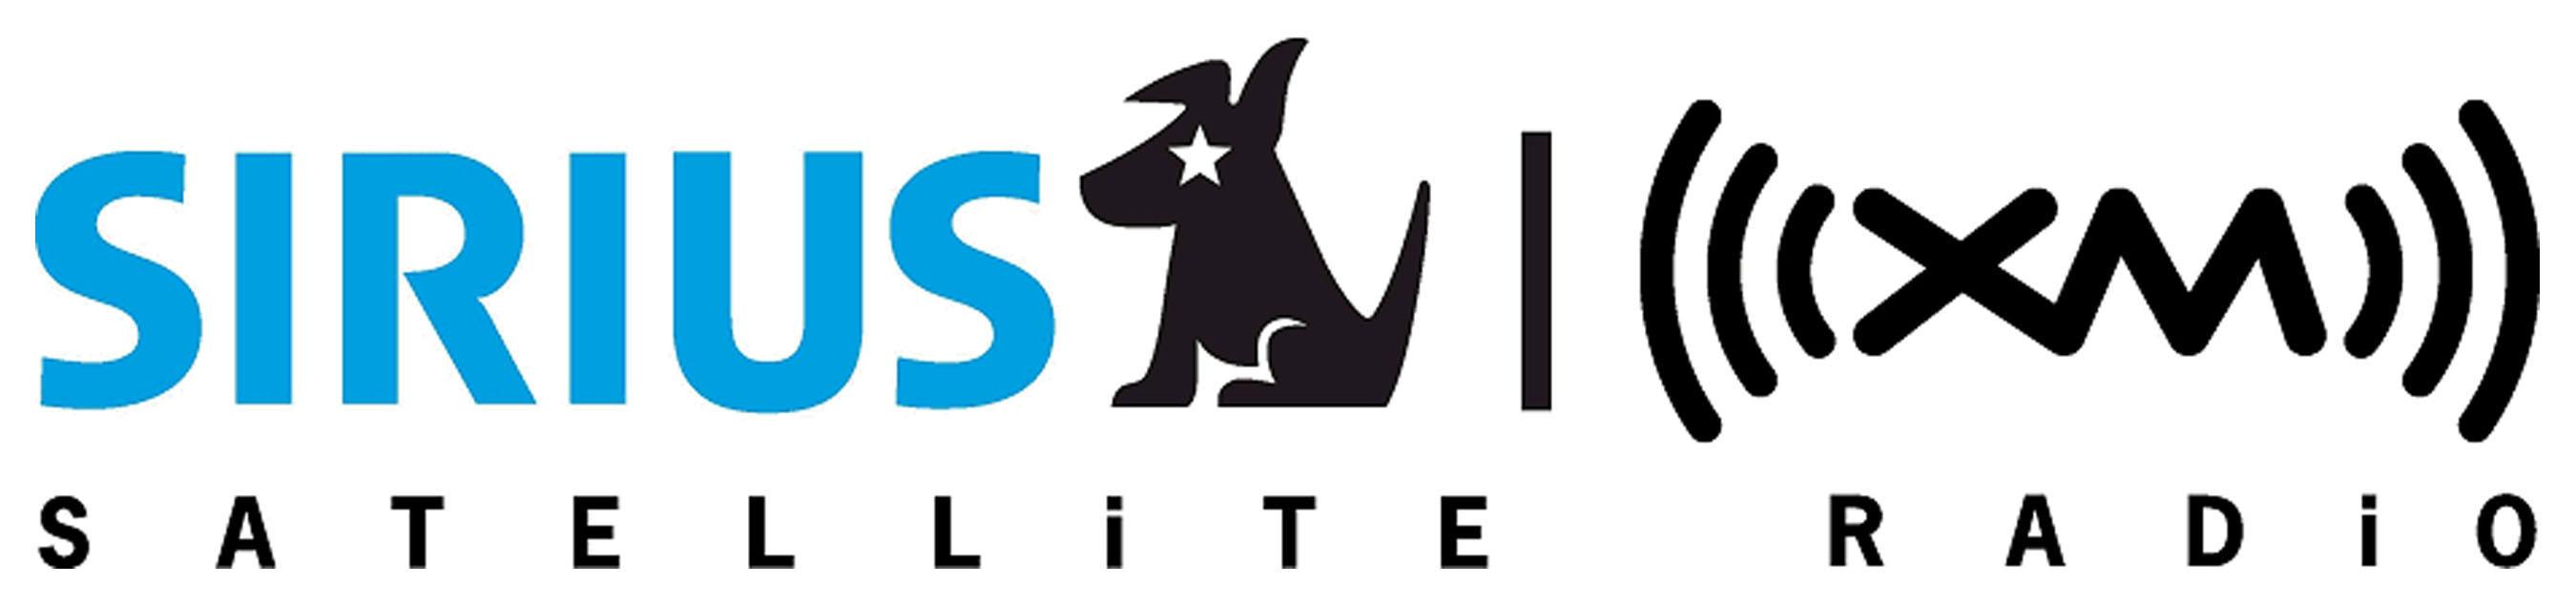 SiriusXM Radio Logo - SIRIUS XM RADIO LOGO - Compliancex | Compliancex